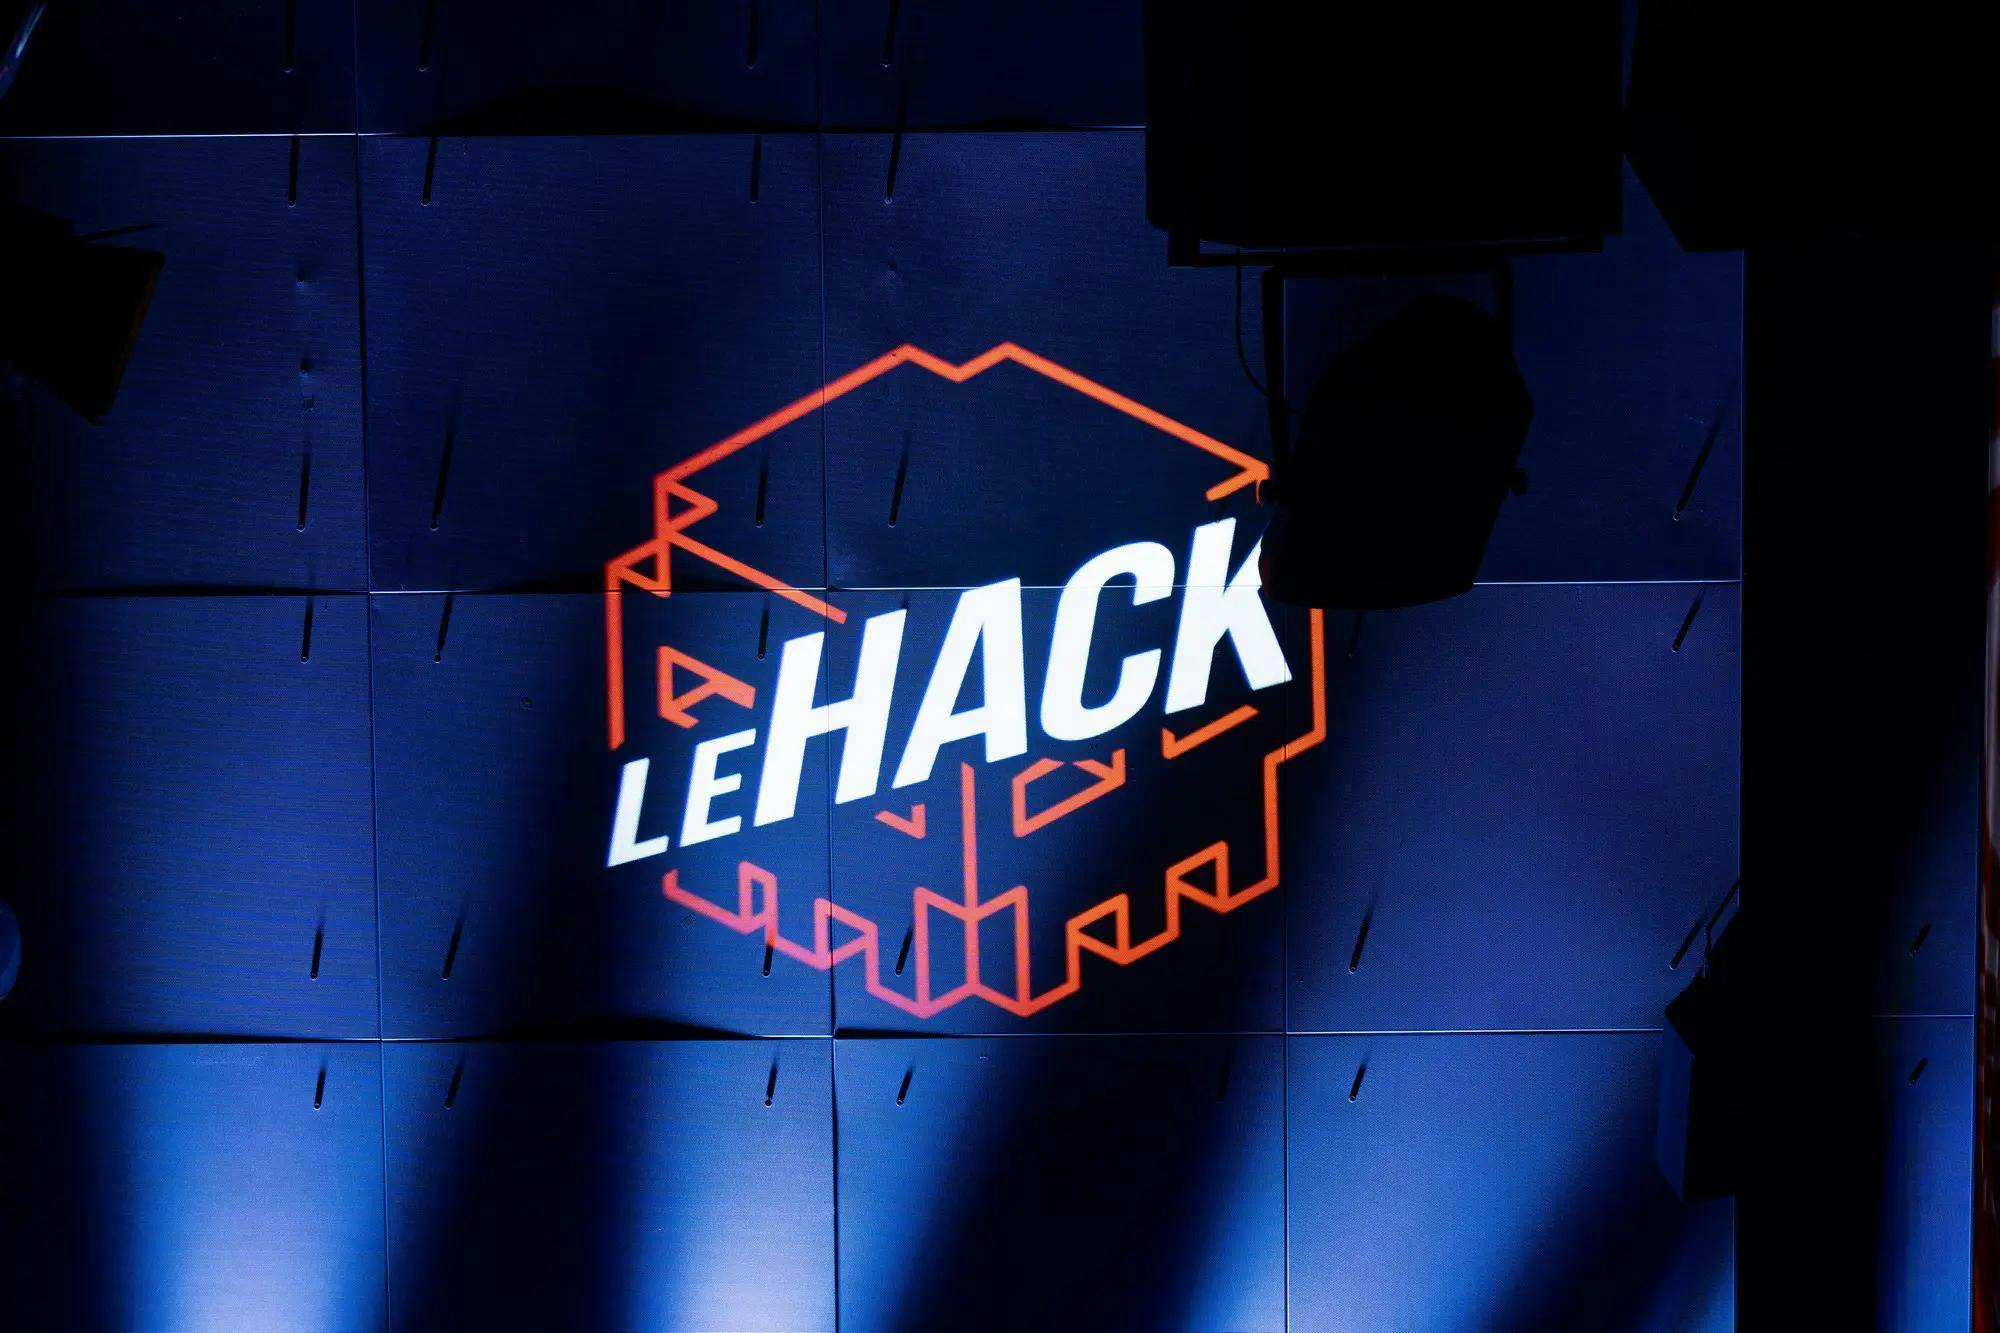 Yeswehack sponsor of LeHack Paris 